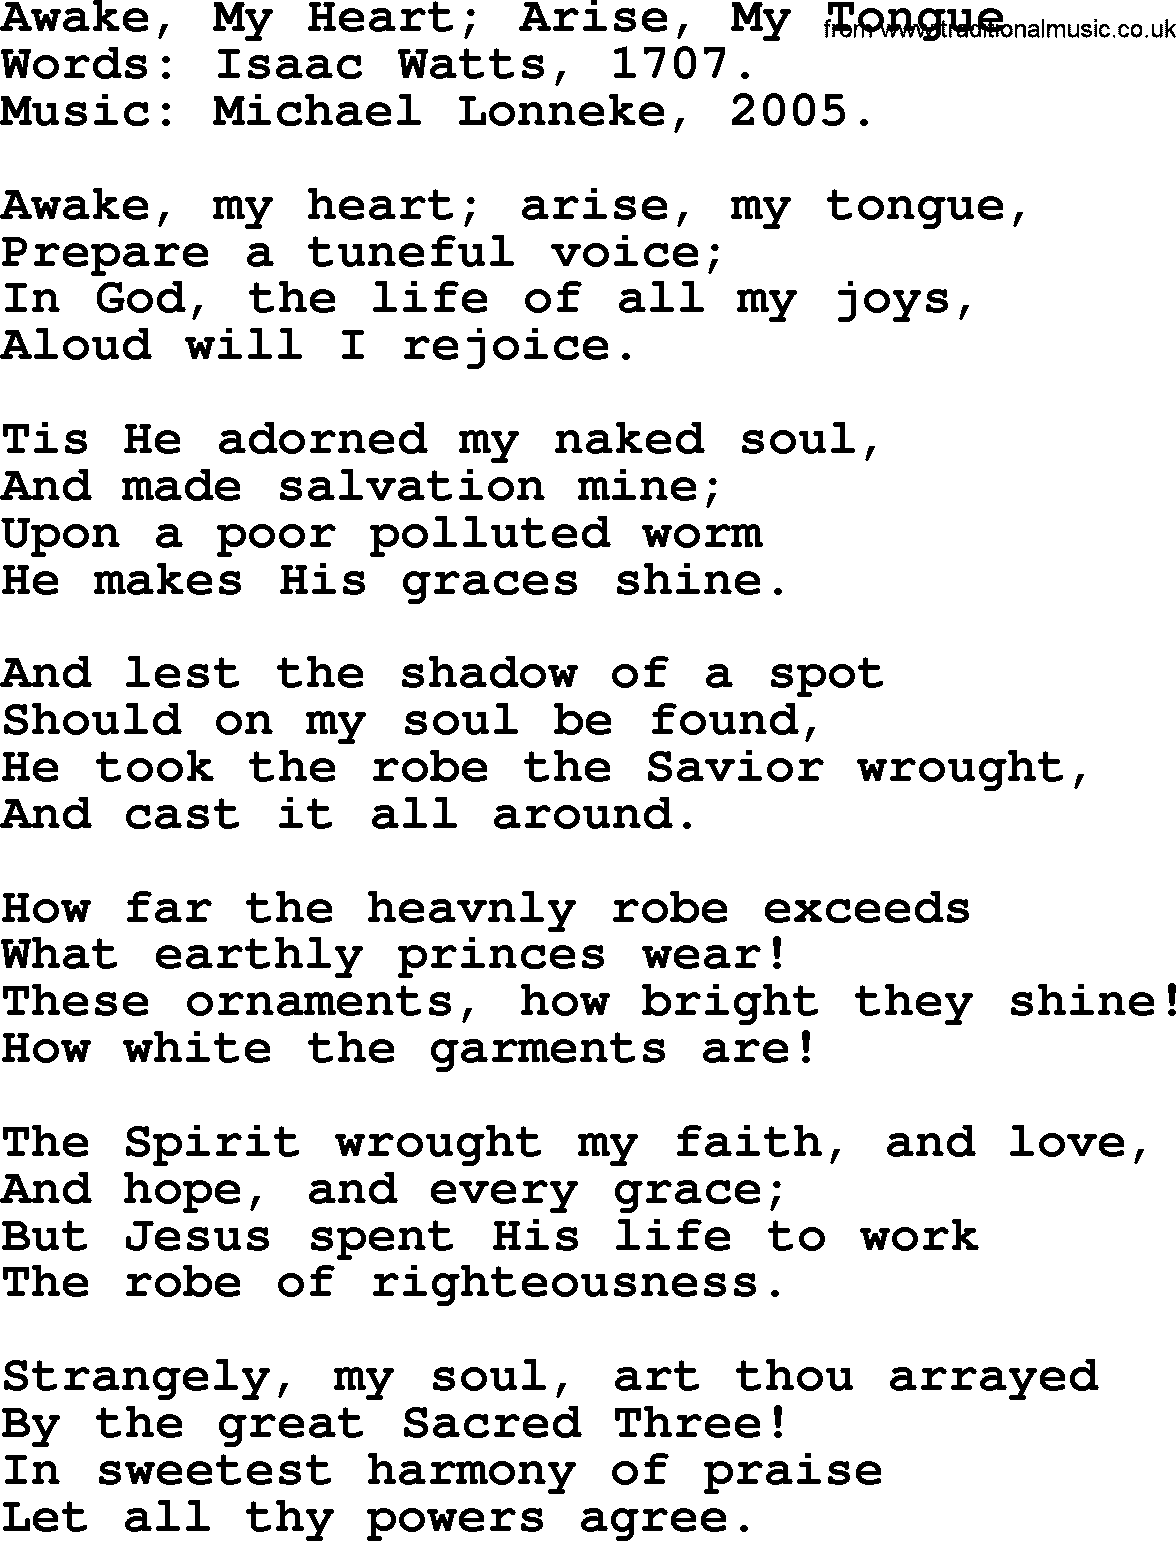 Isaac Watts Christian hymn: Awake, My Heart; Arise, My Tongue- lyricss